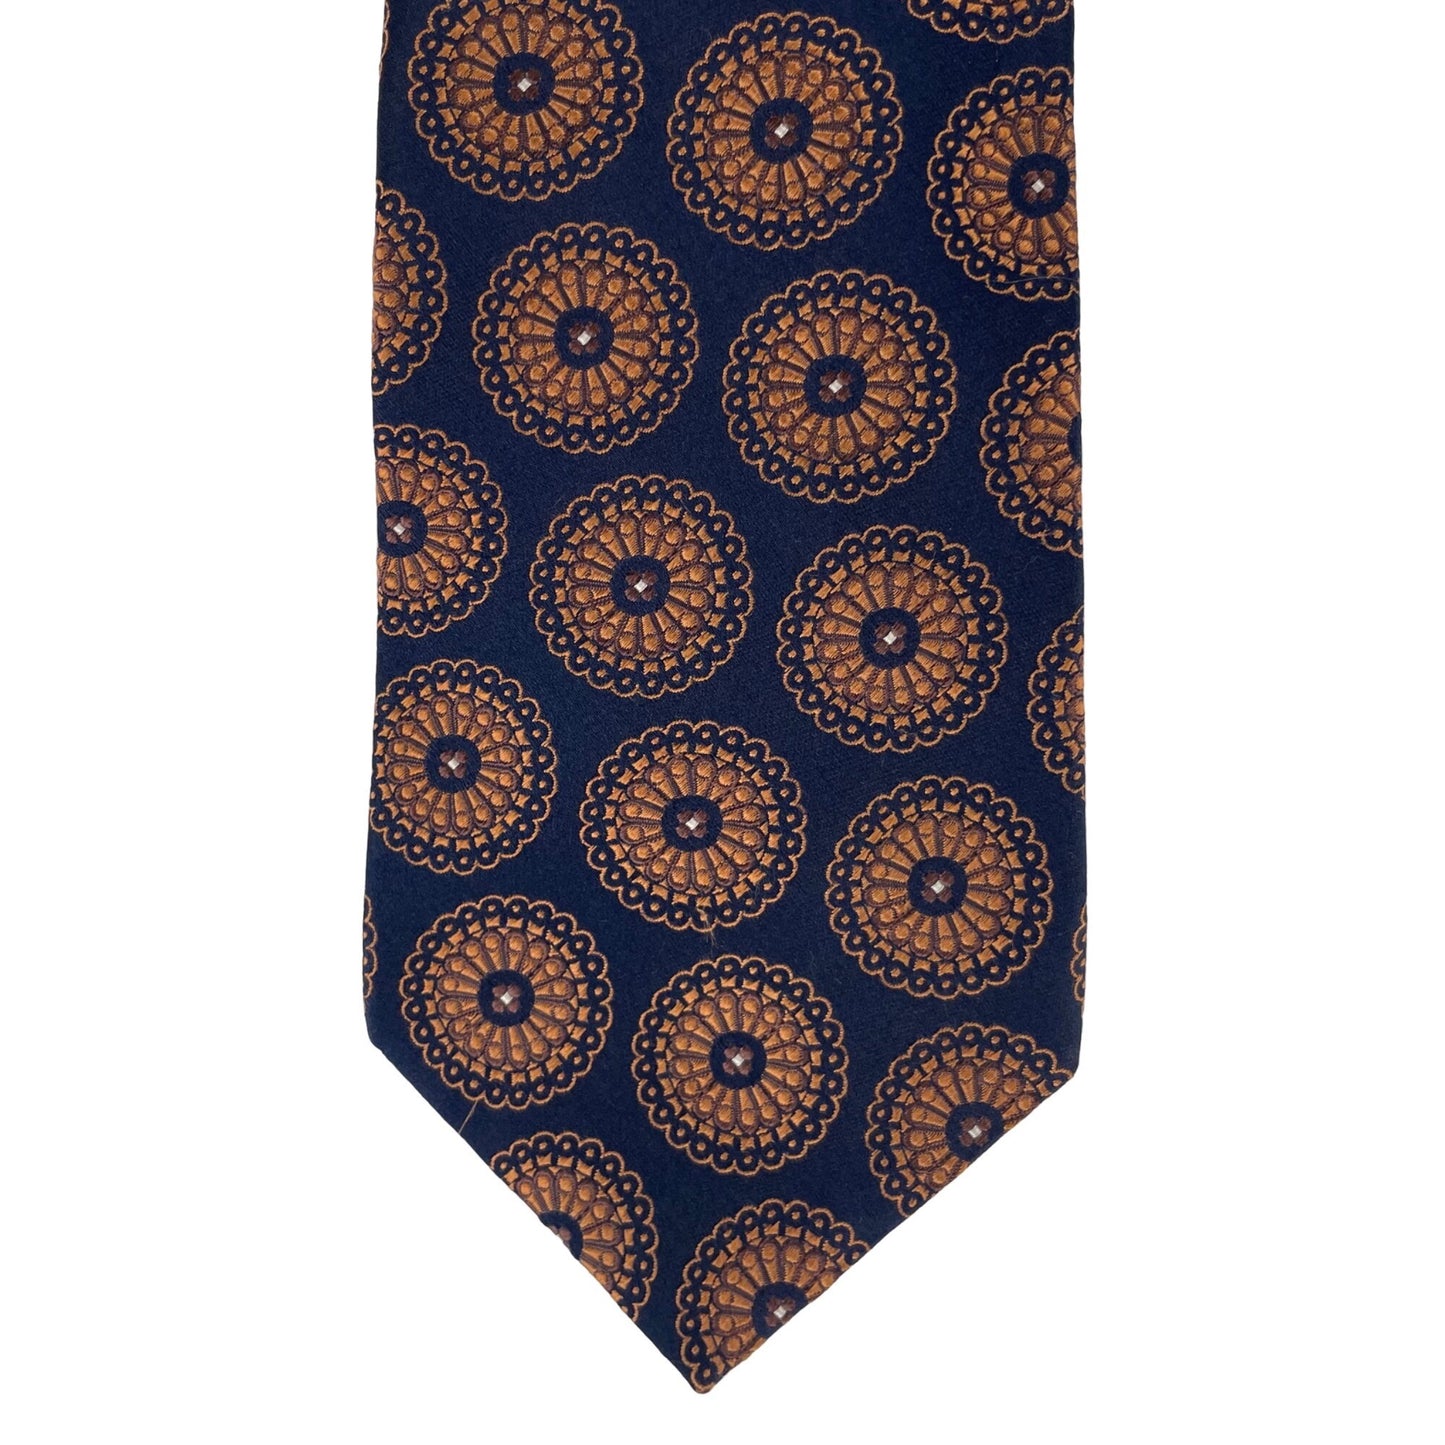 Banana Republic Men's Navy and Metallic Orange Floral 100% Silk Dress Tie